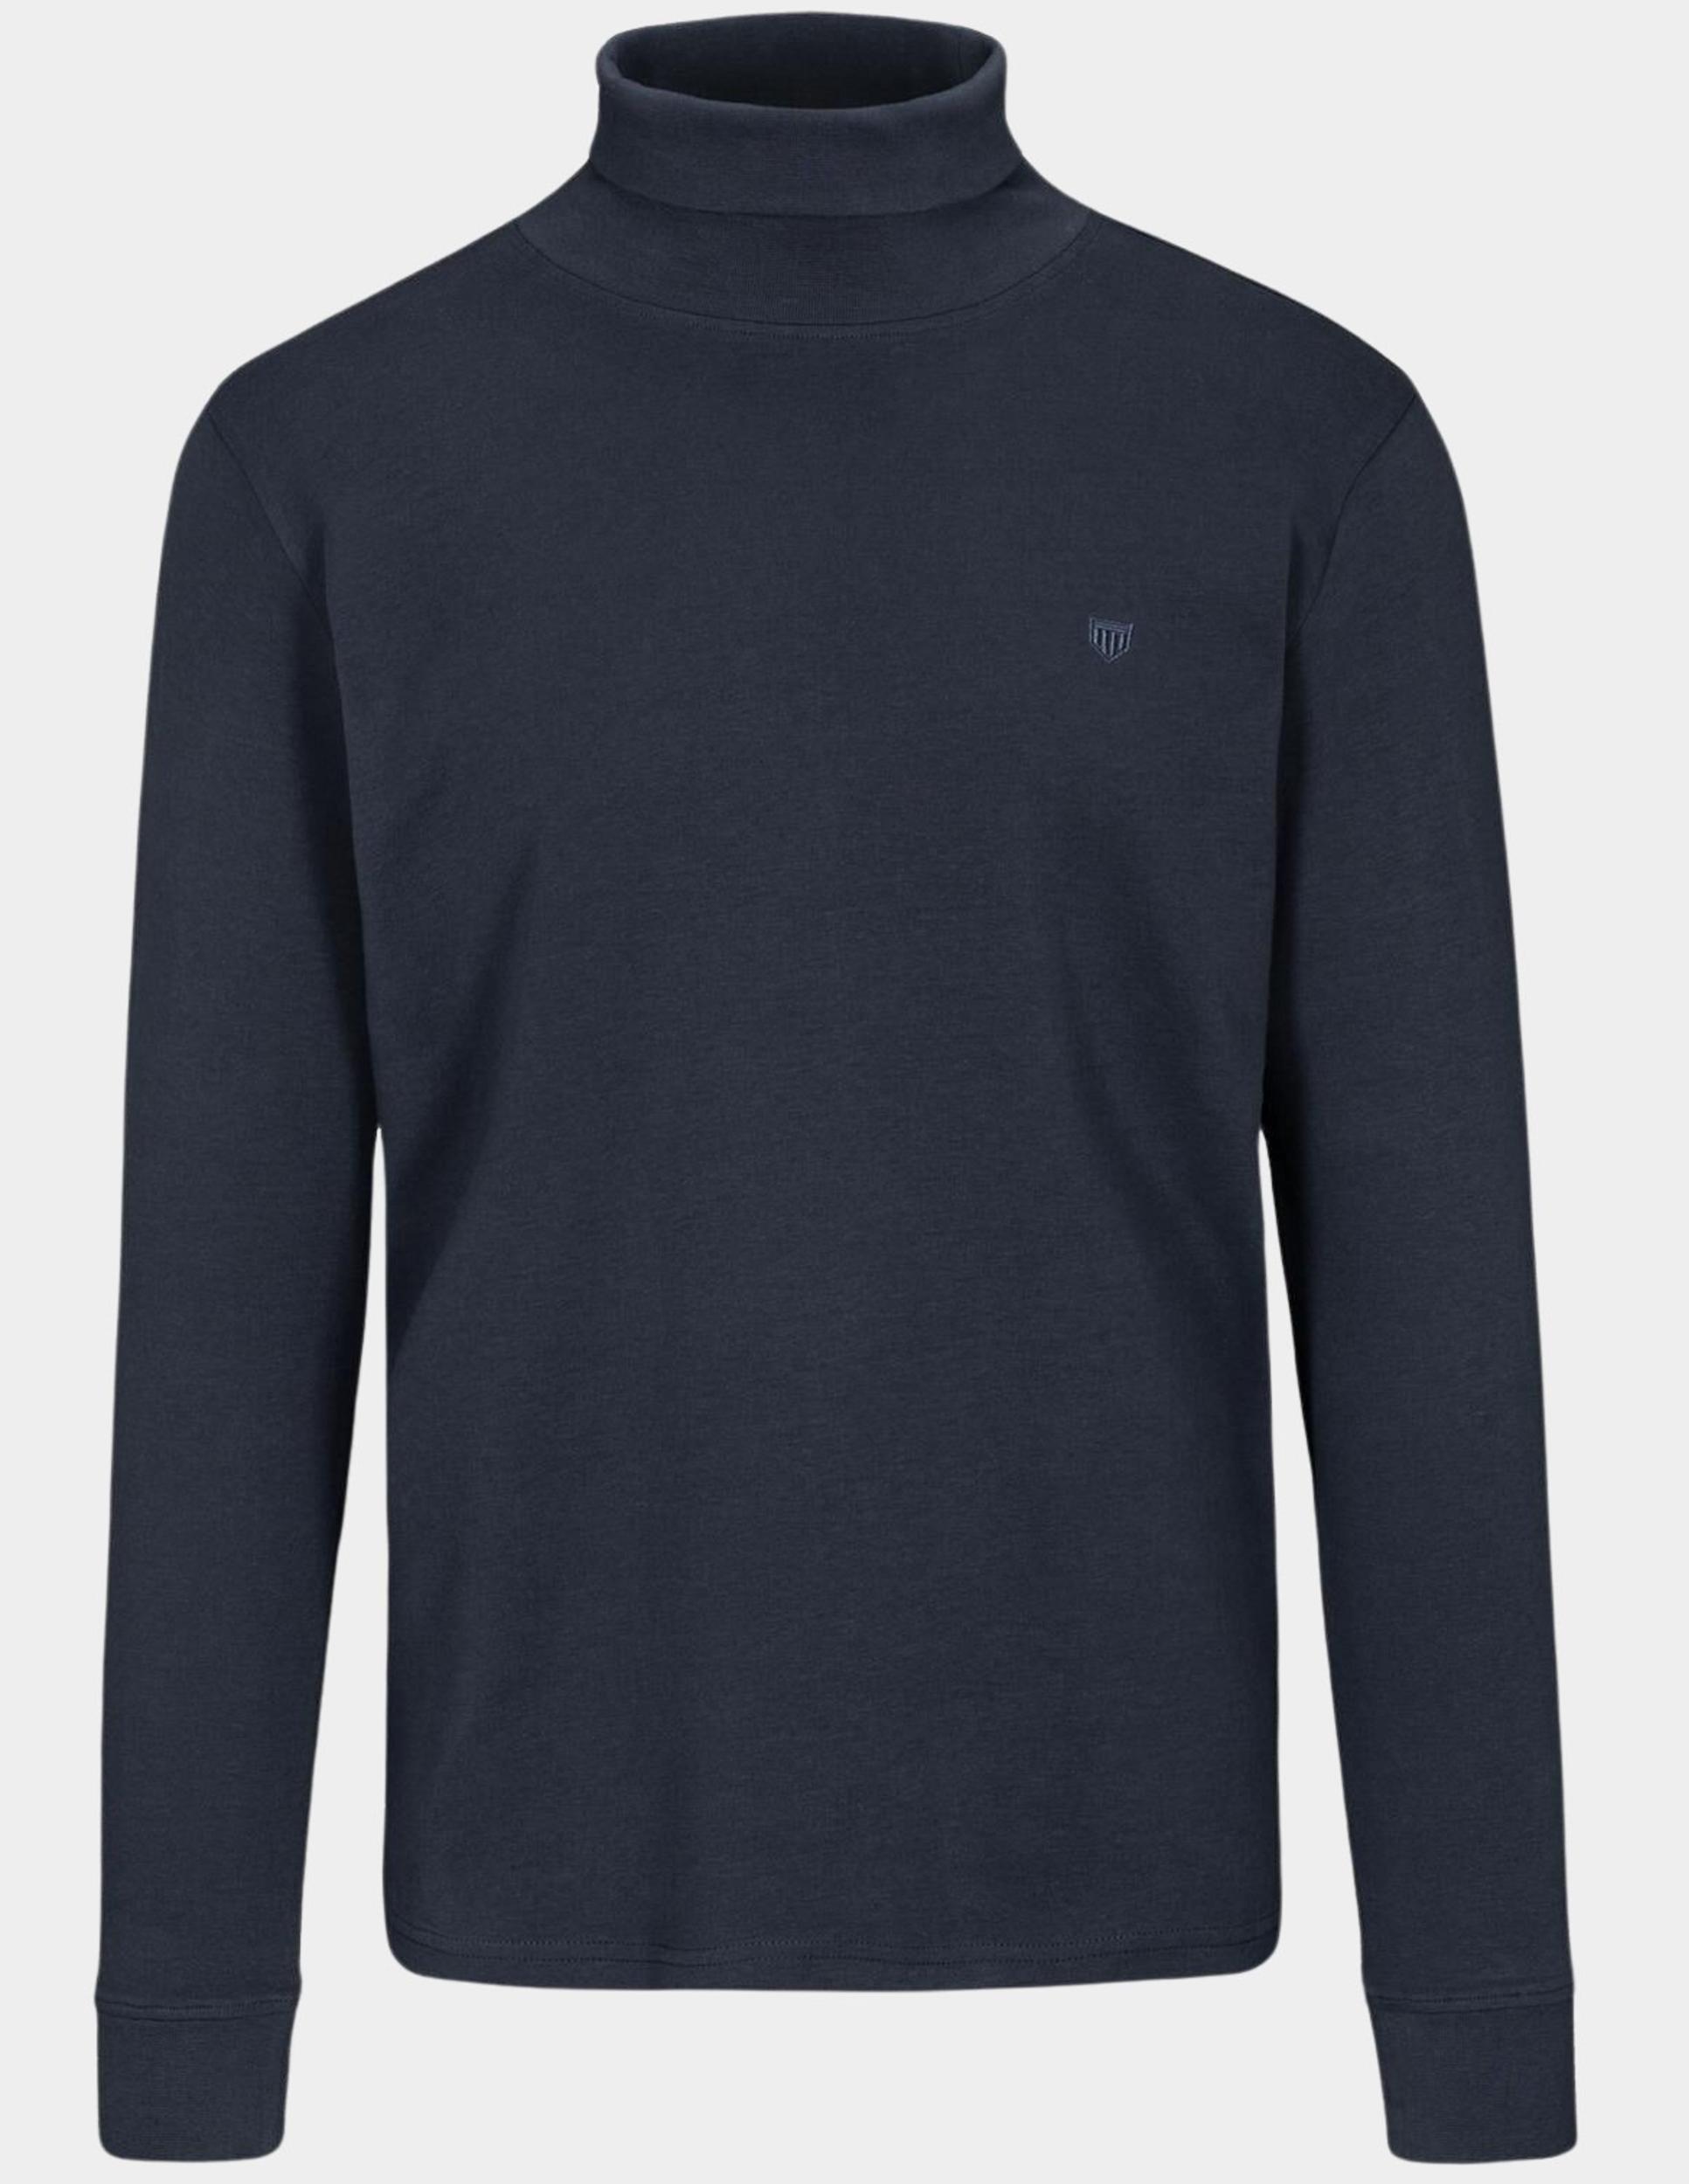 Basefield T-shirt lange mouw Blauw Rollkragen Shirt 1/1 219017855/608